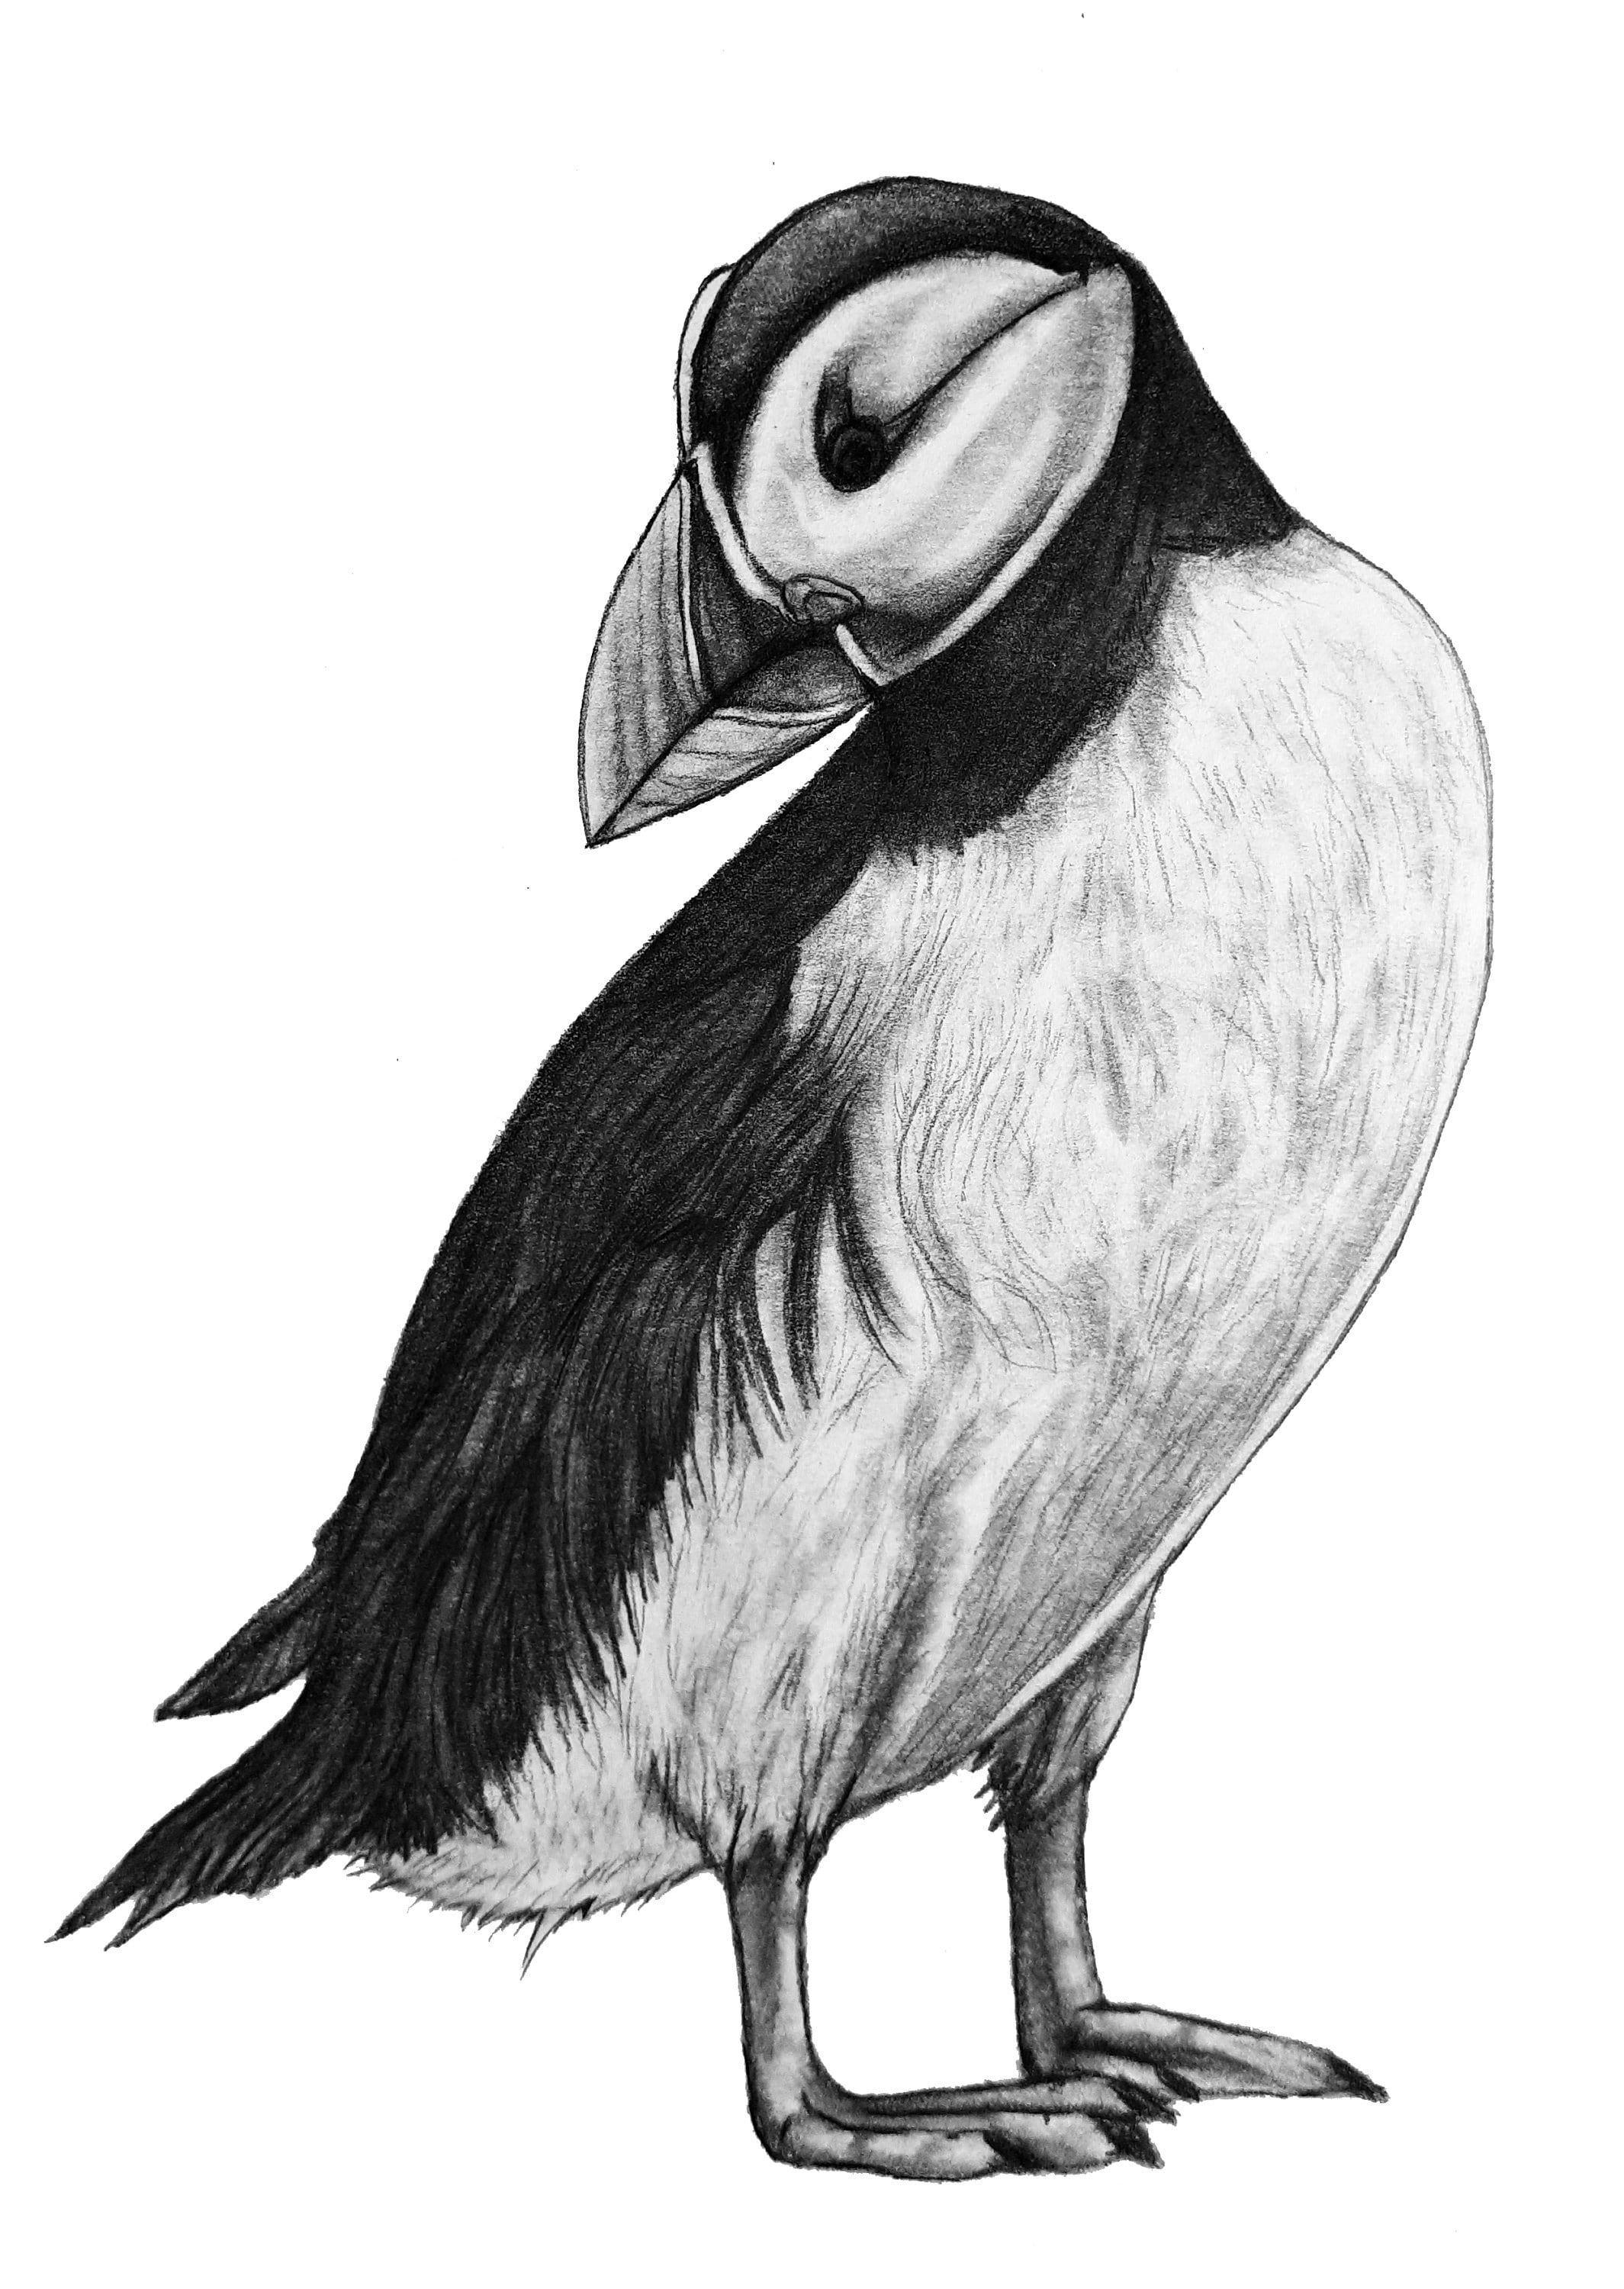 Puffin Bird Sketch Pencil Drawing Stock Illustration 1165775599   Shutterstock